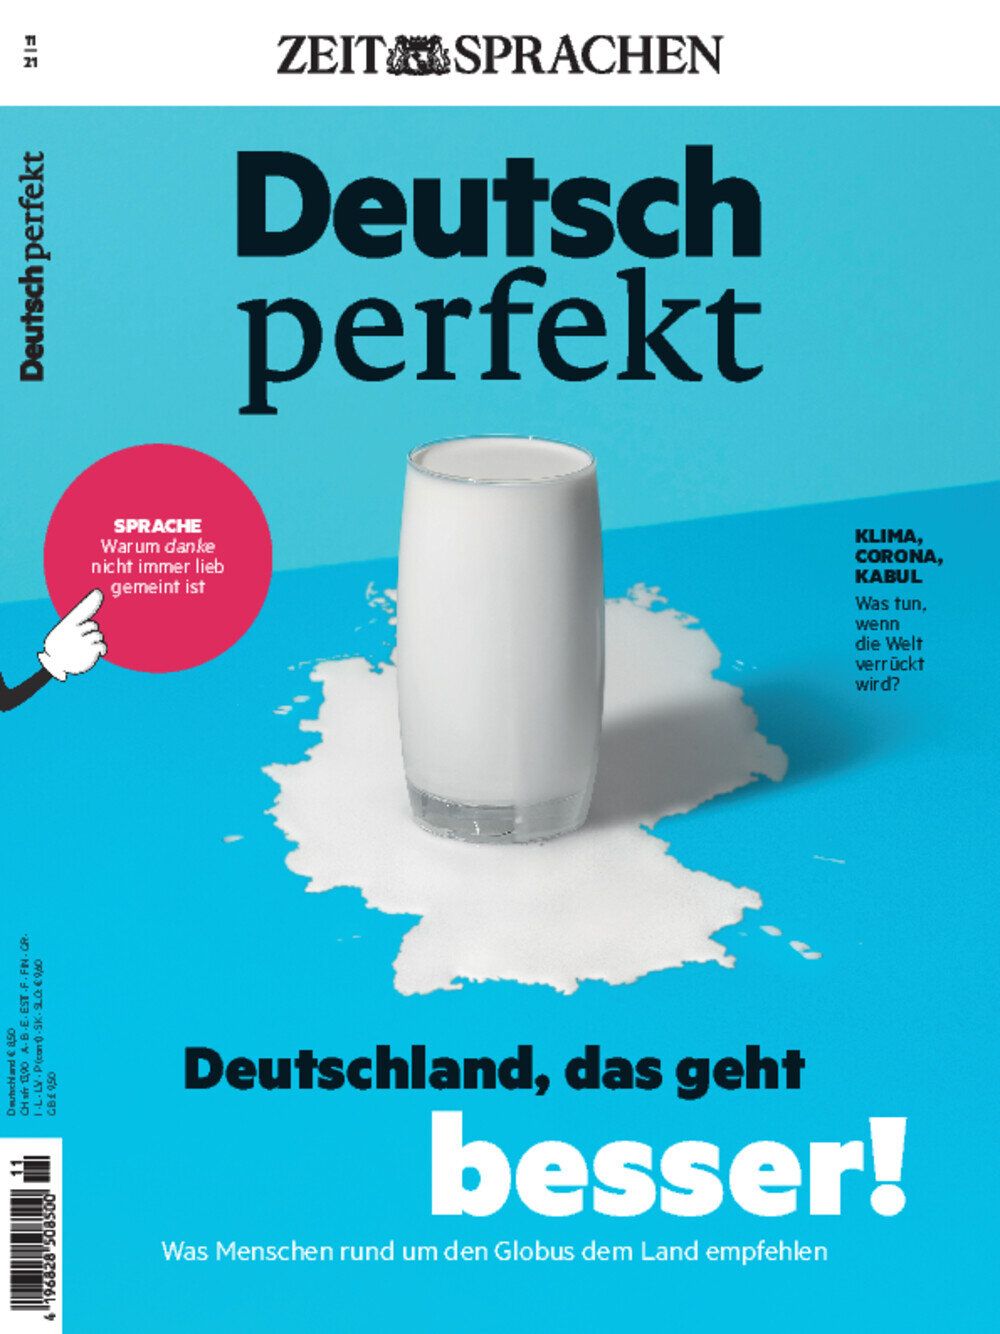 Deutsch perfekt 11/2021